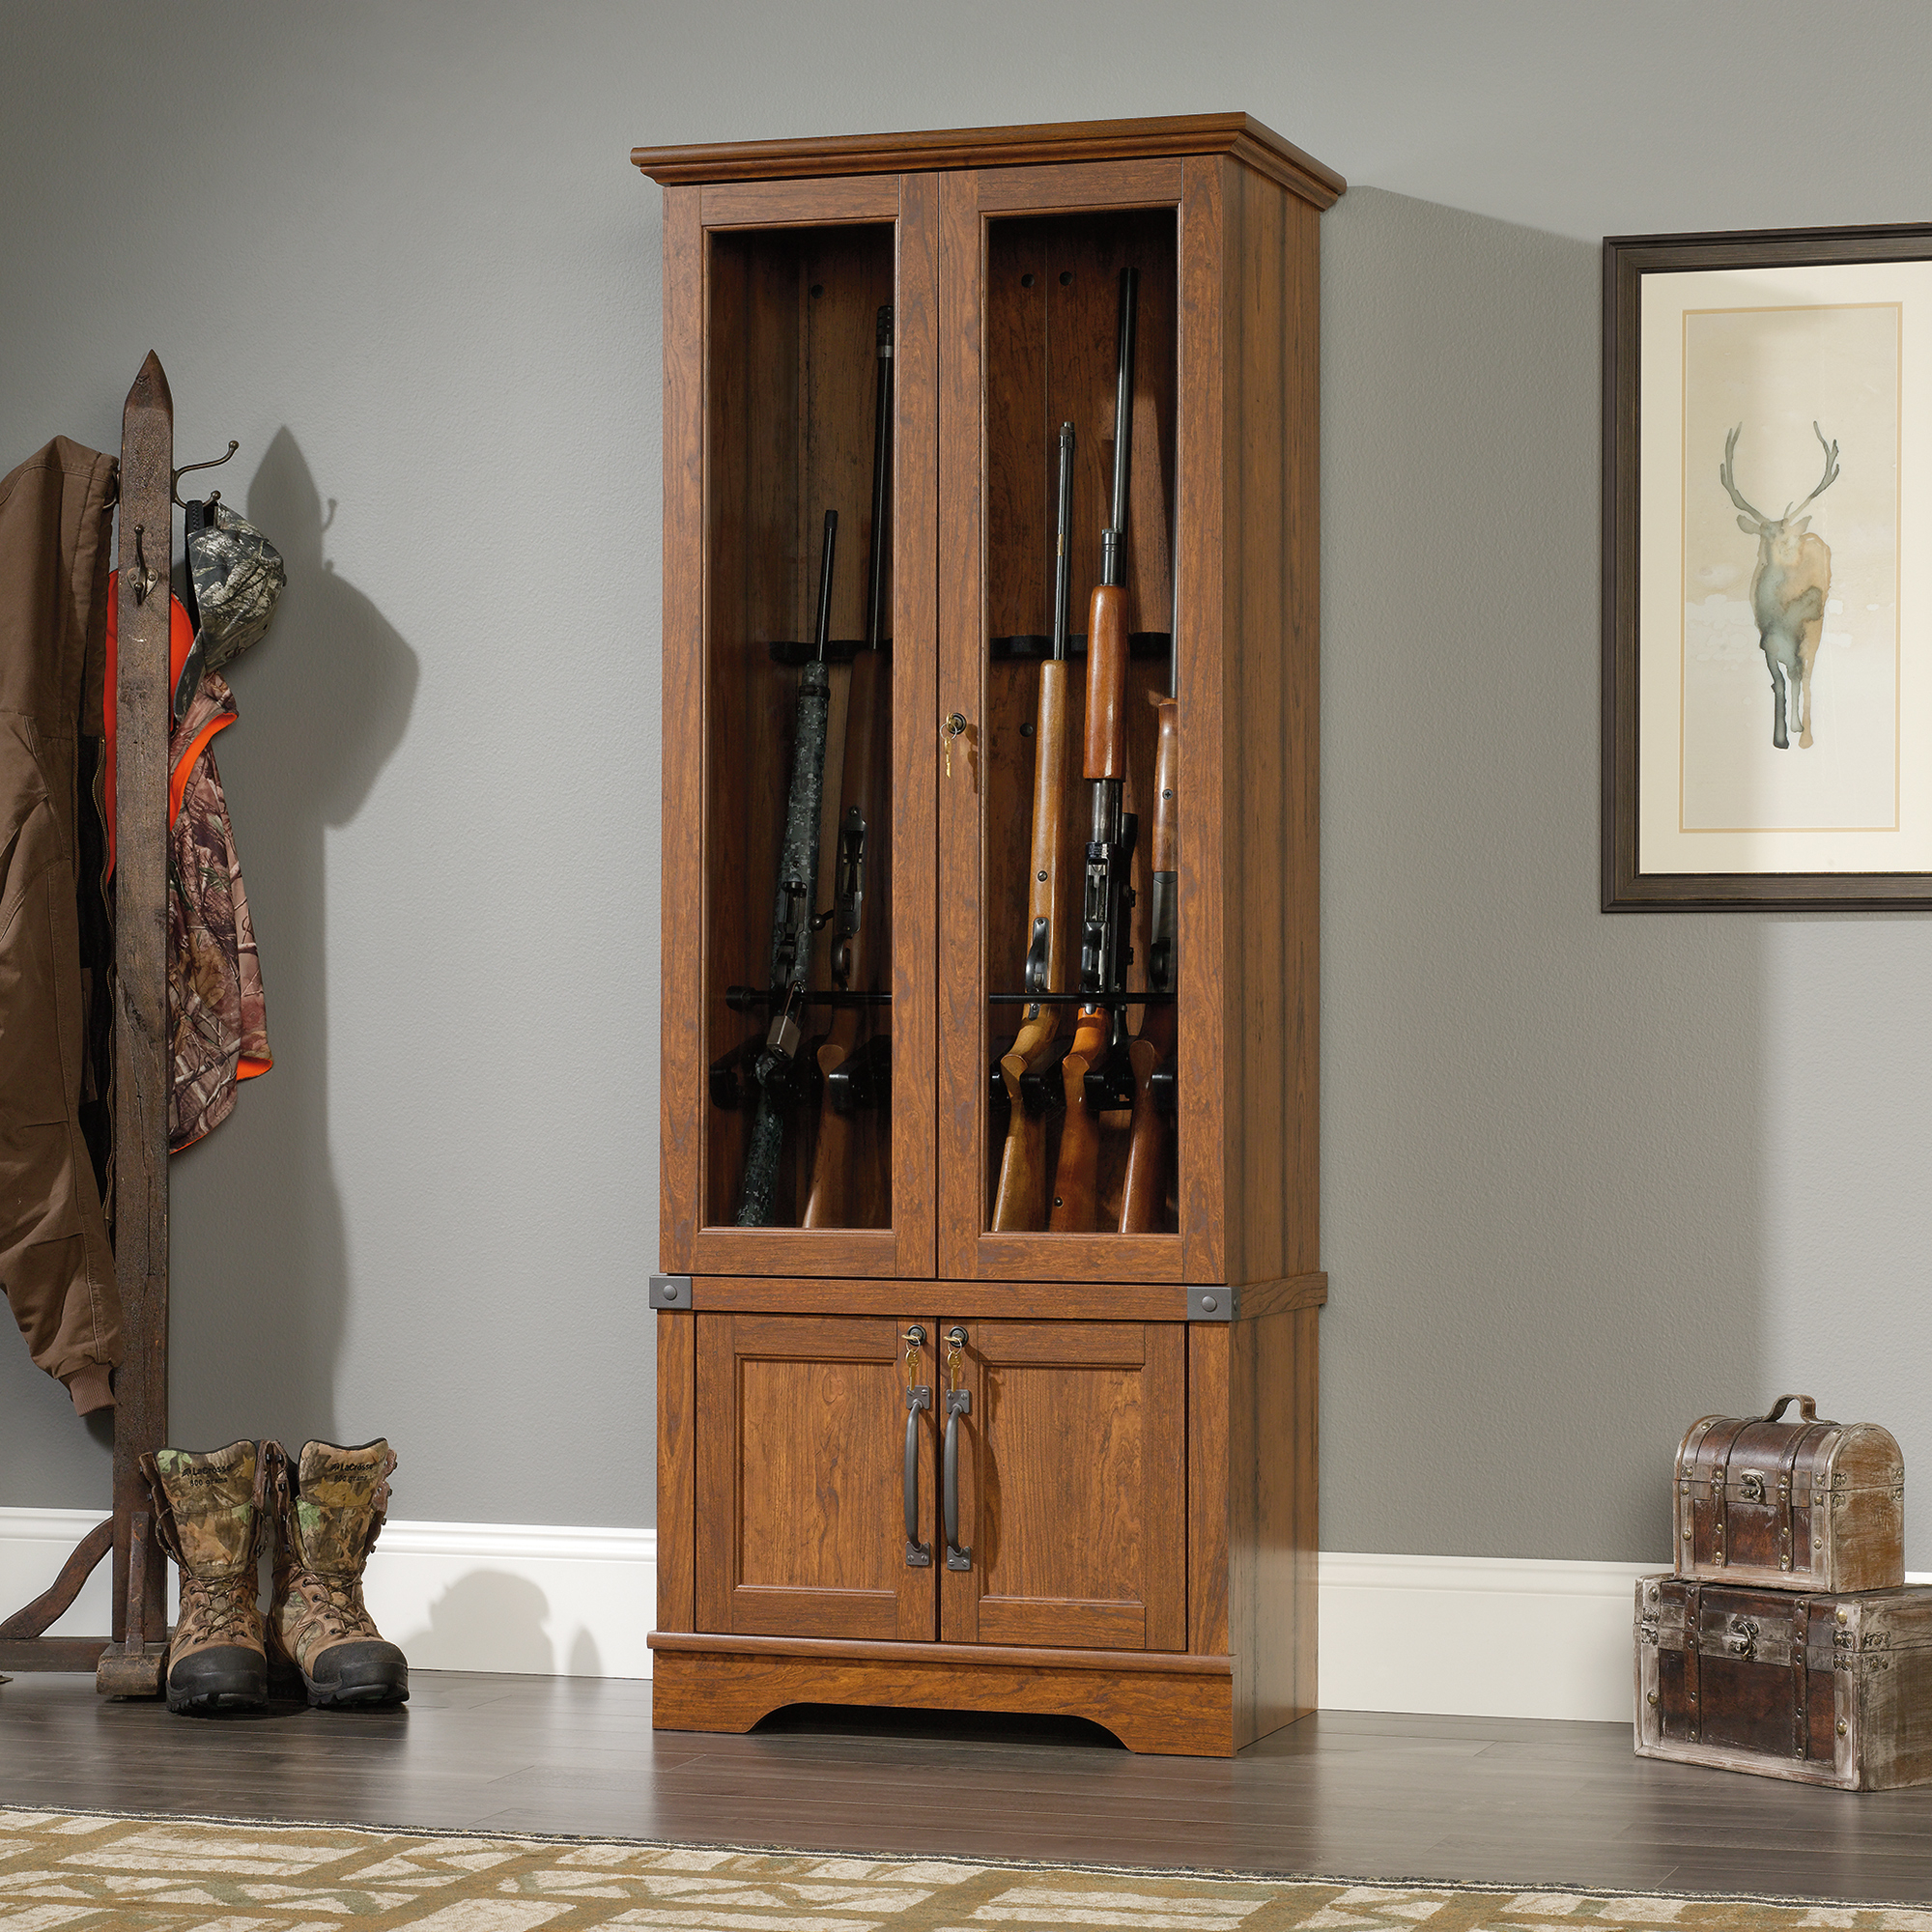 Carson Forge Gun Display Cabinet 419575 Sauder within size 2000 X 2000